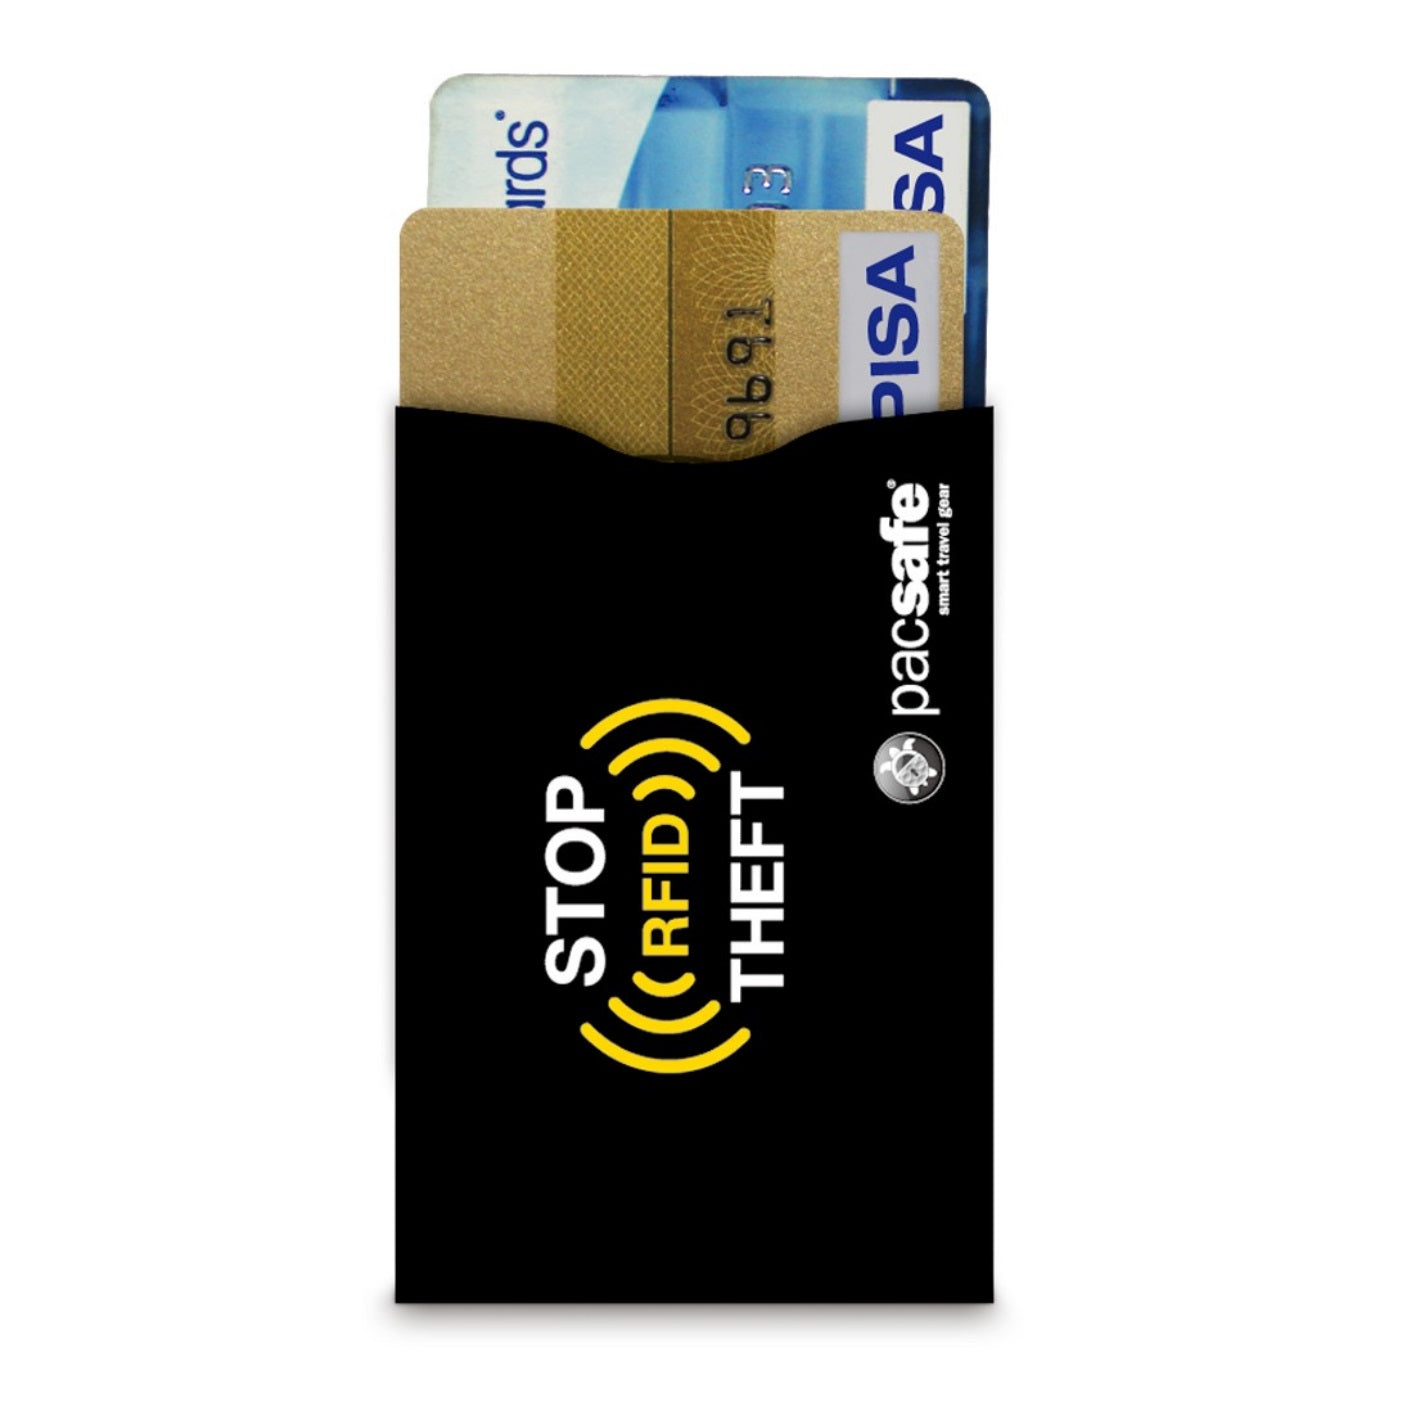 Pacsafe RFIDsleeve 25 RFID-Blocking Credit Card Sleeve (2-Pack, Black)